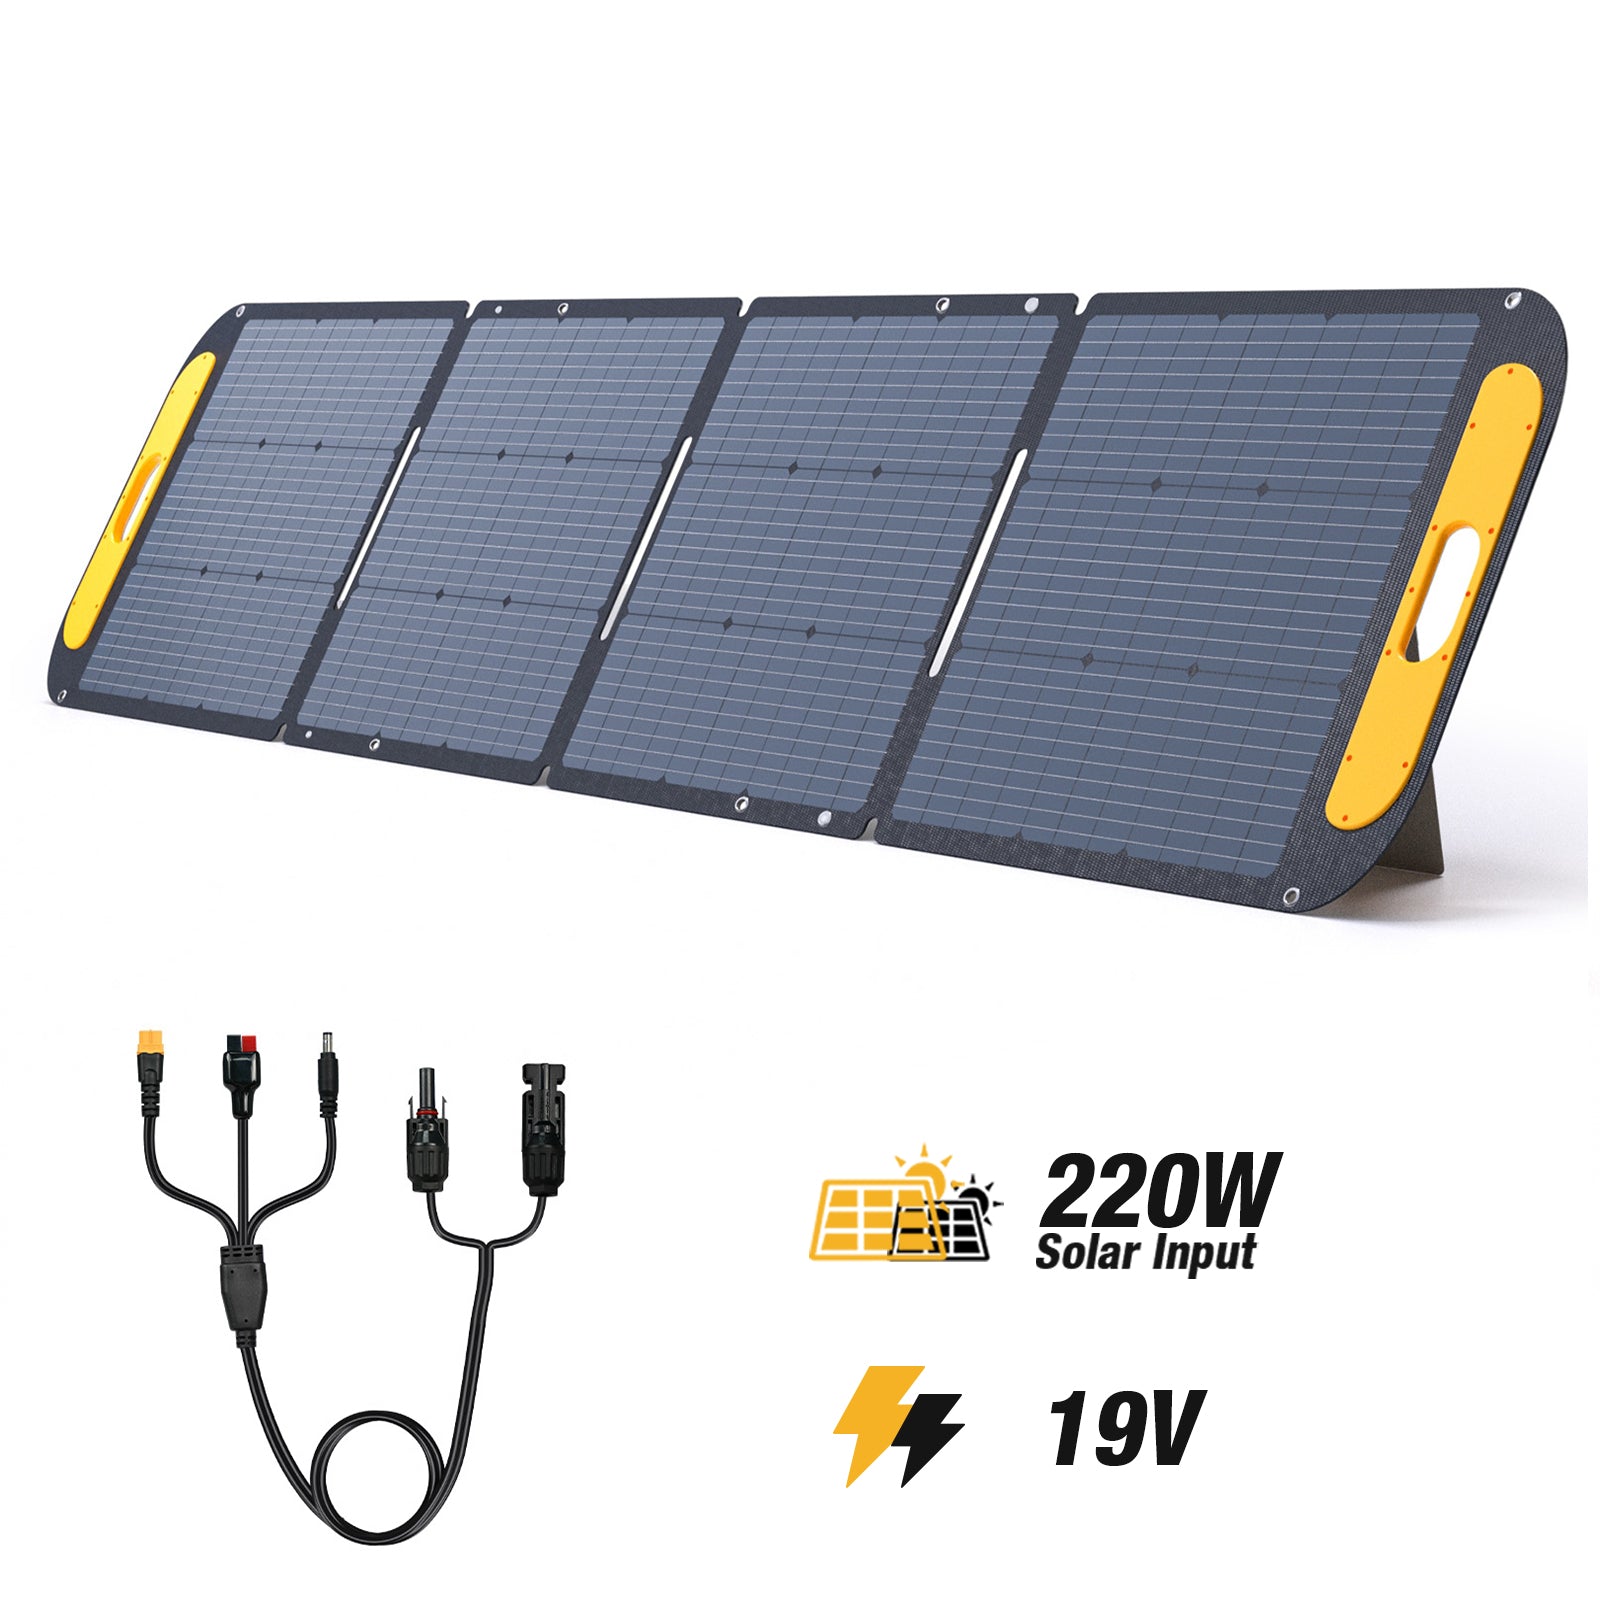 VTOMAN VS220 Solar Panel with 220W and 19V